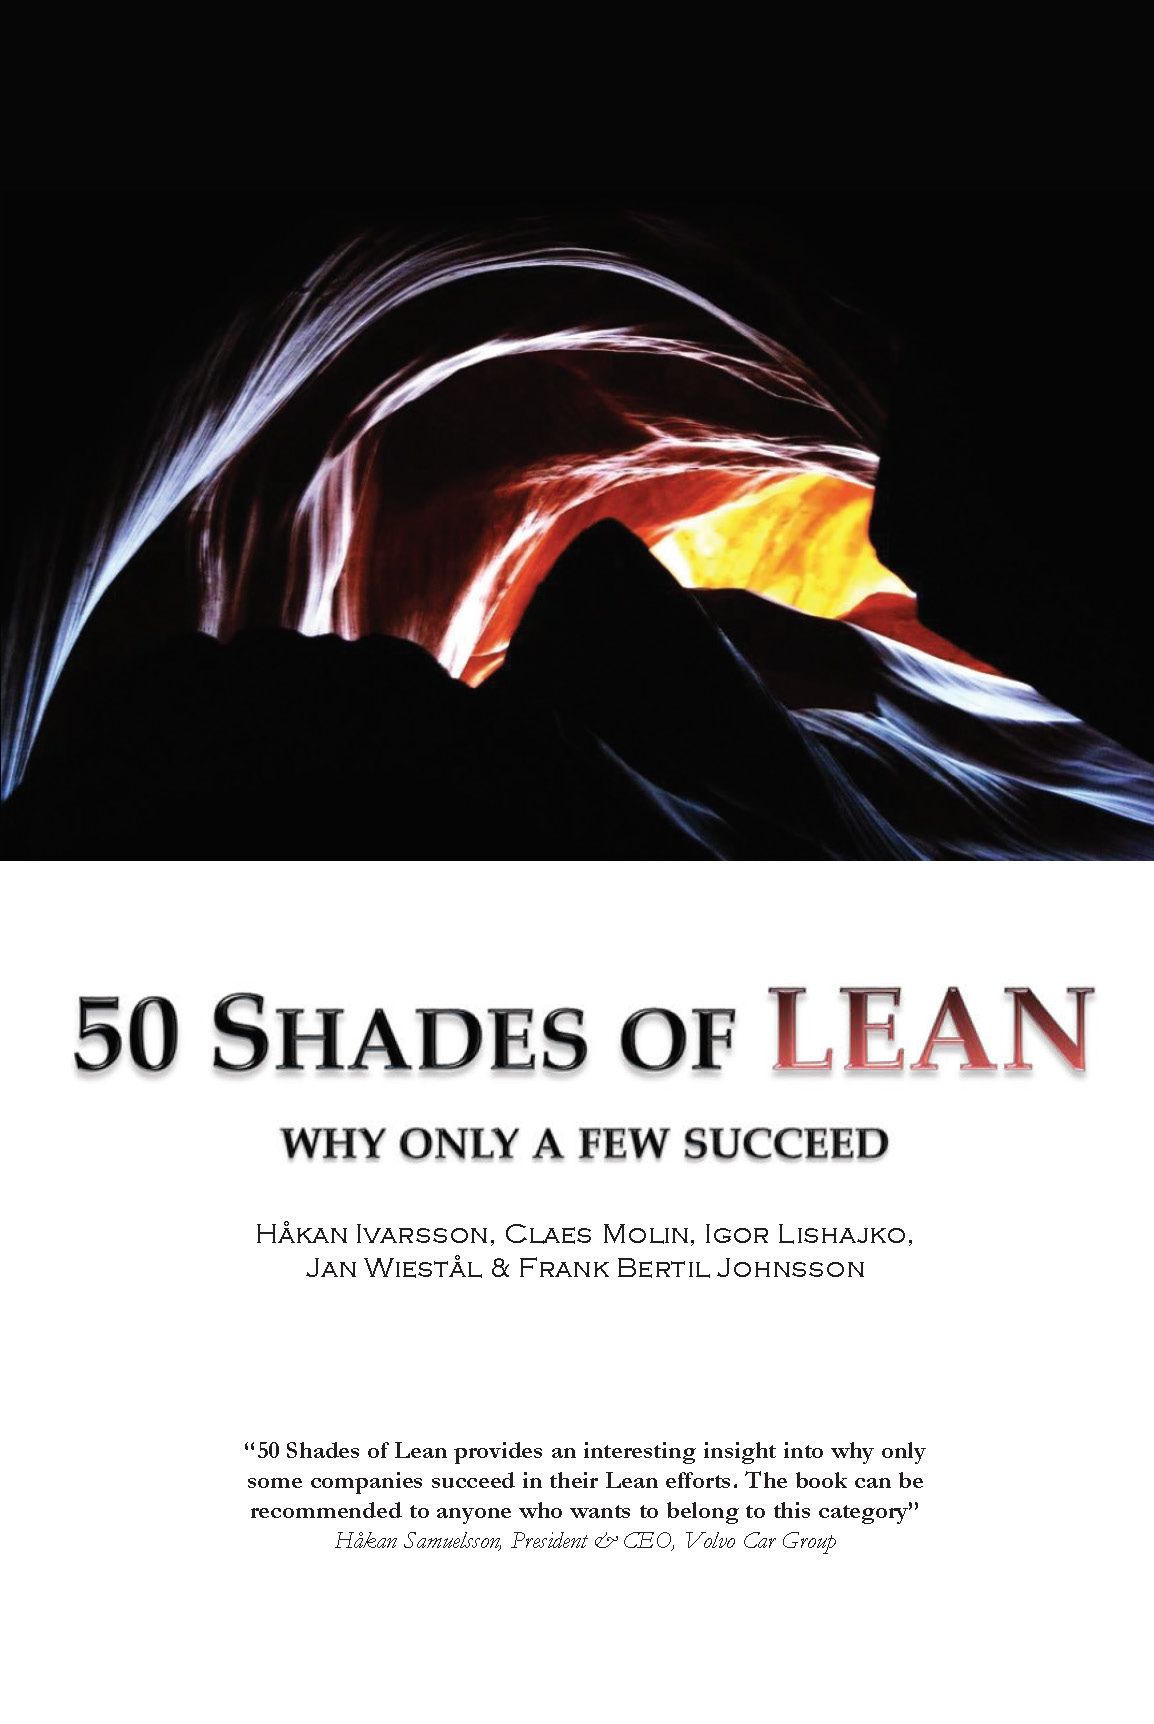 50 shades of LEAN, eBook by Håkan Ivarsson, Frank Bertil Johnsson, Igor Lishajko, Claes Molin, Jan Wiestål